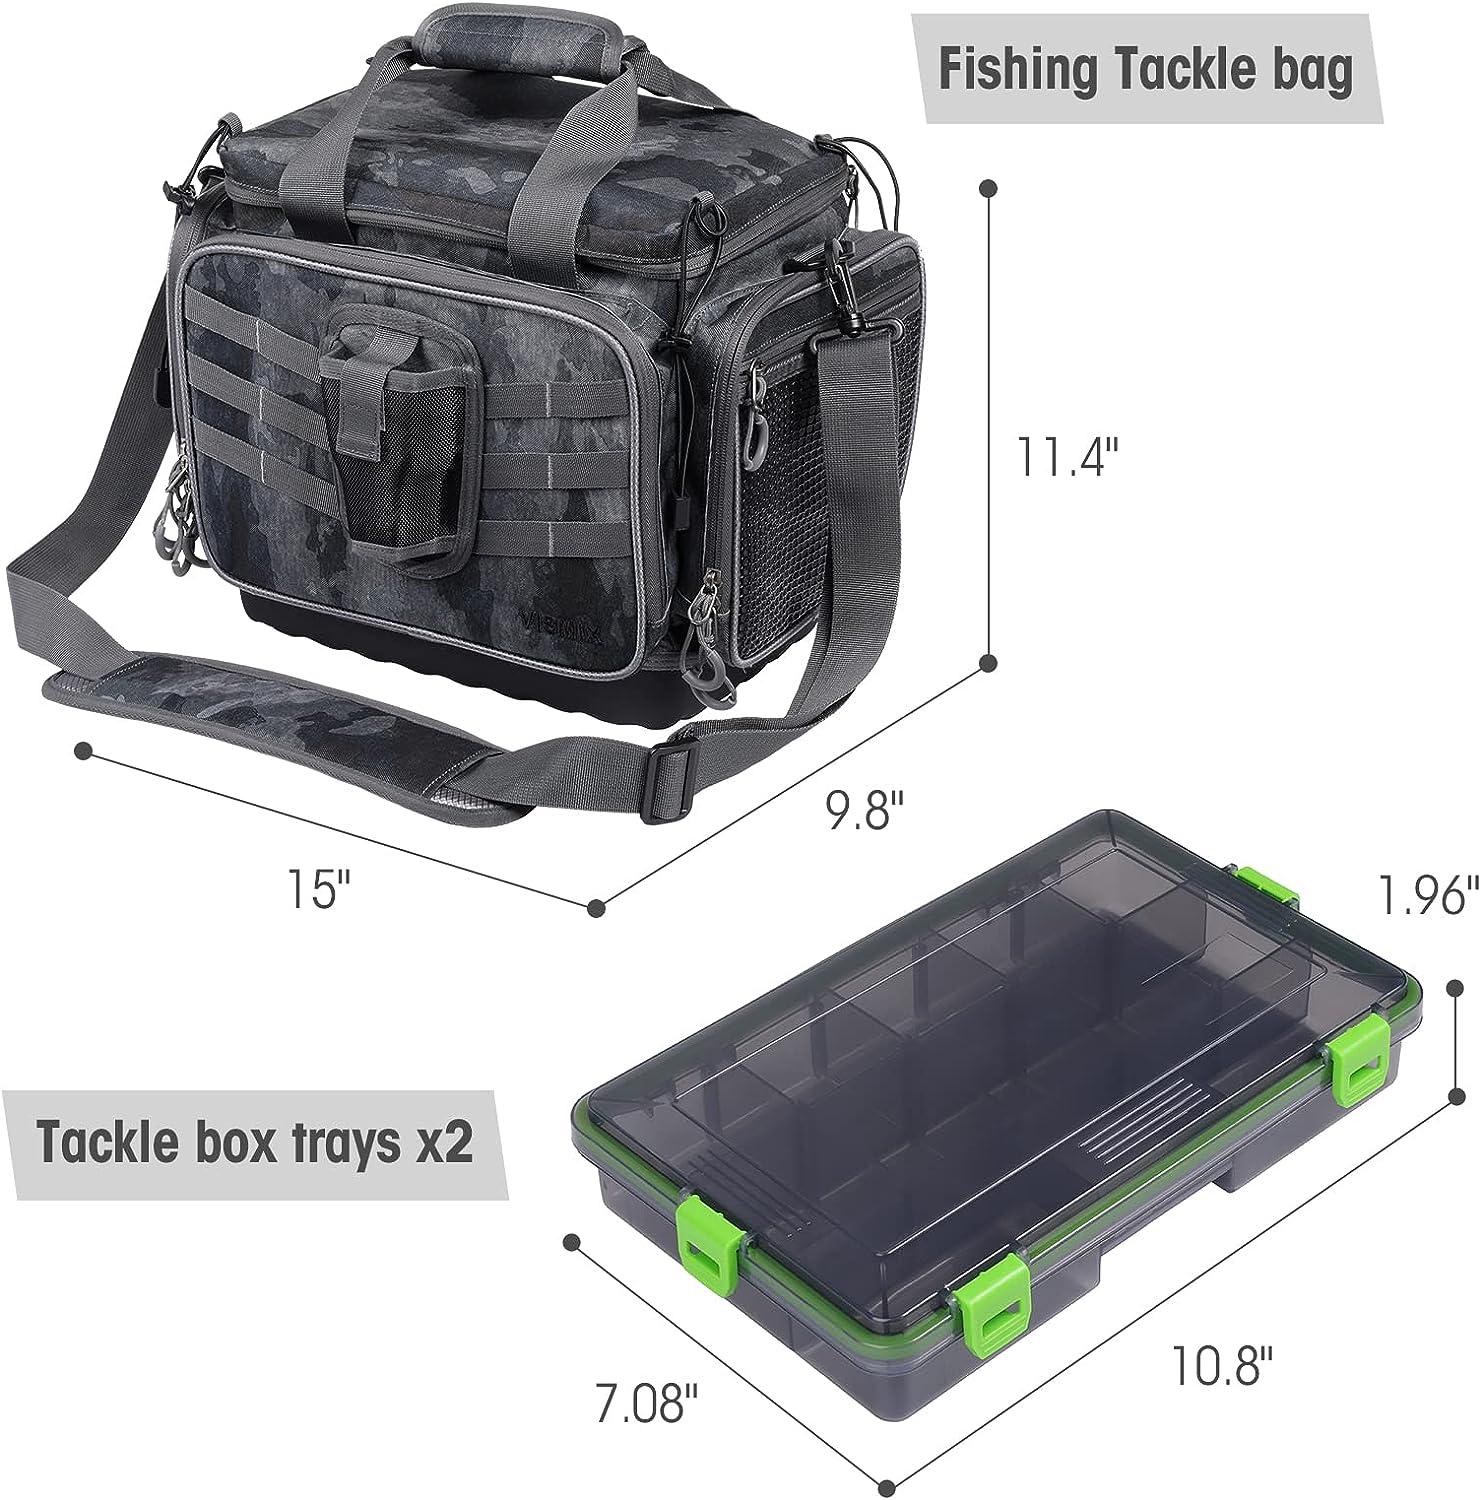 VISMIX Fishing Tackle Bag- Fishing Bag Large Water-Resistant